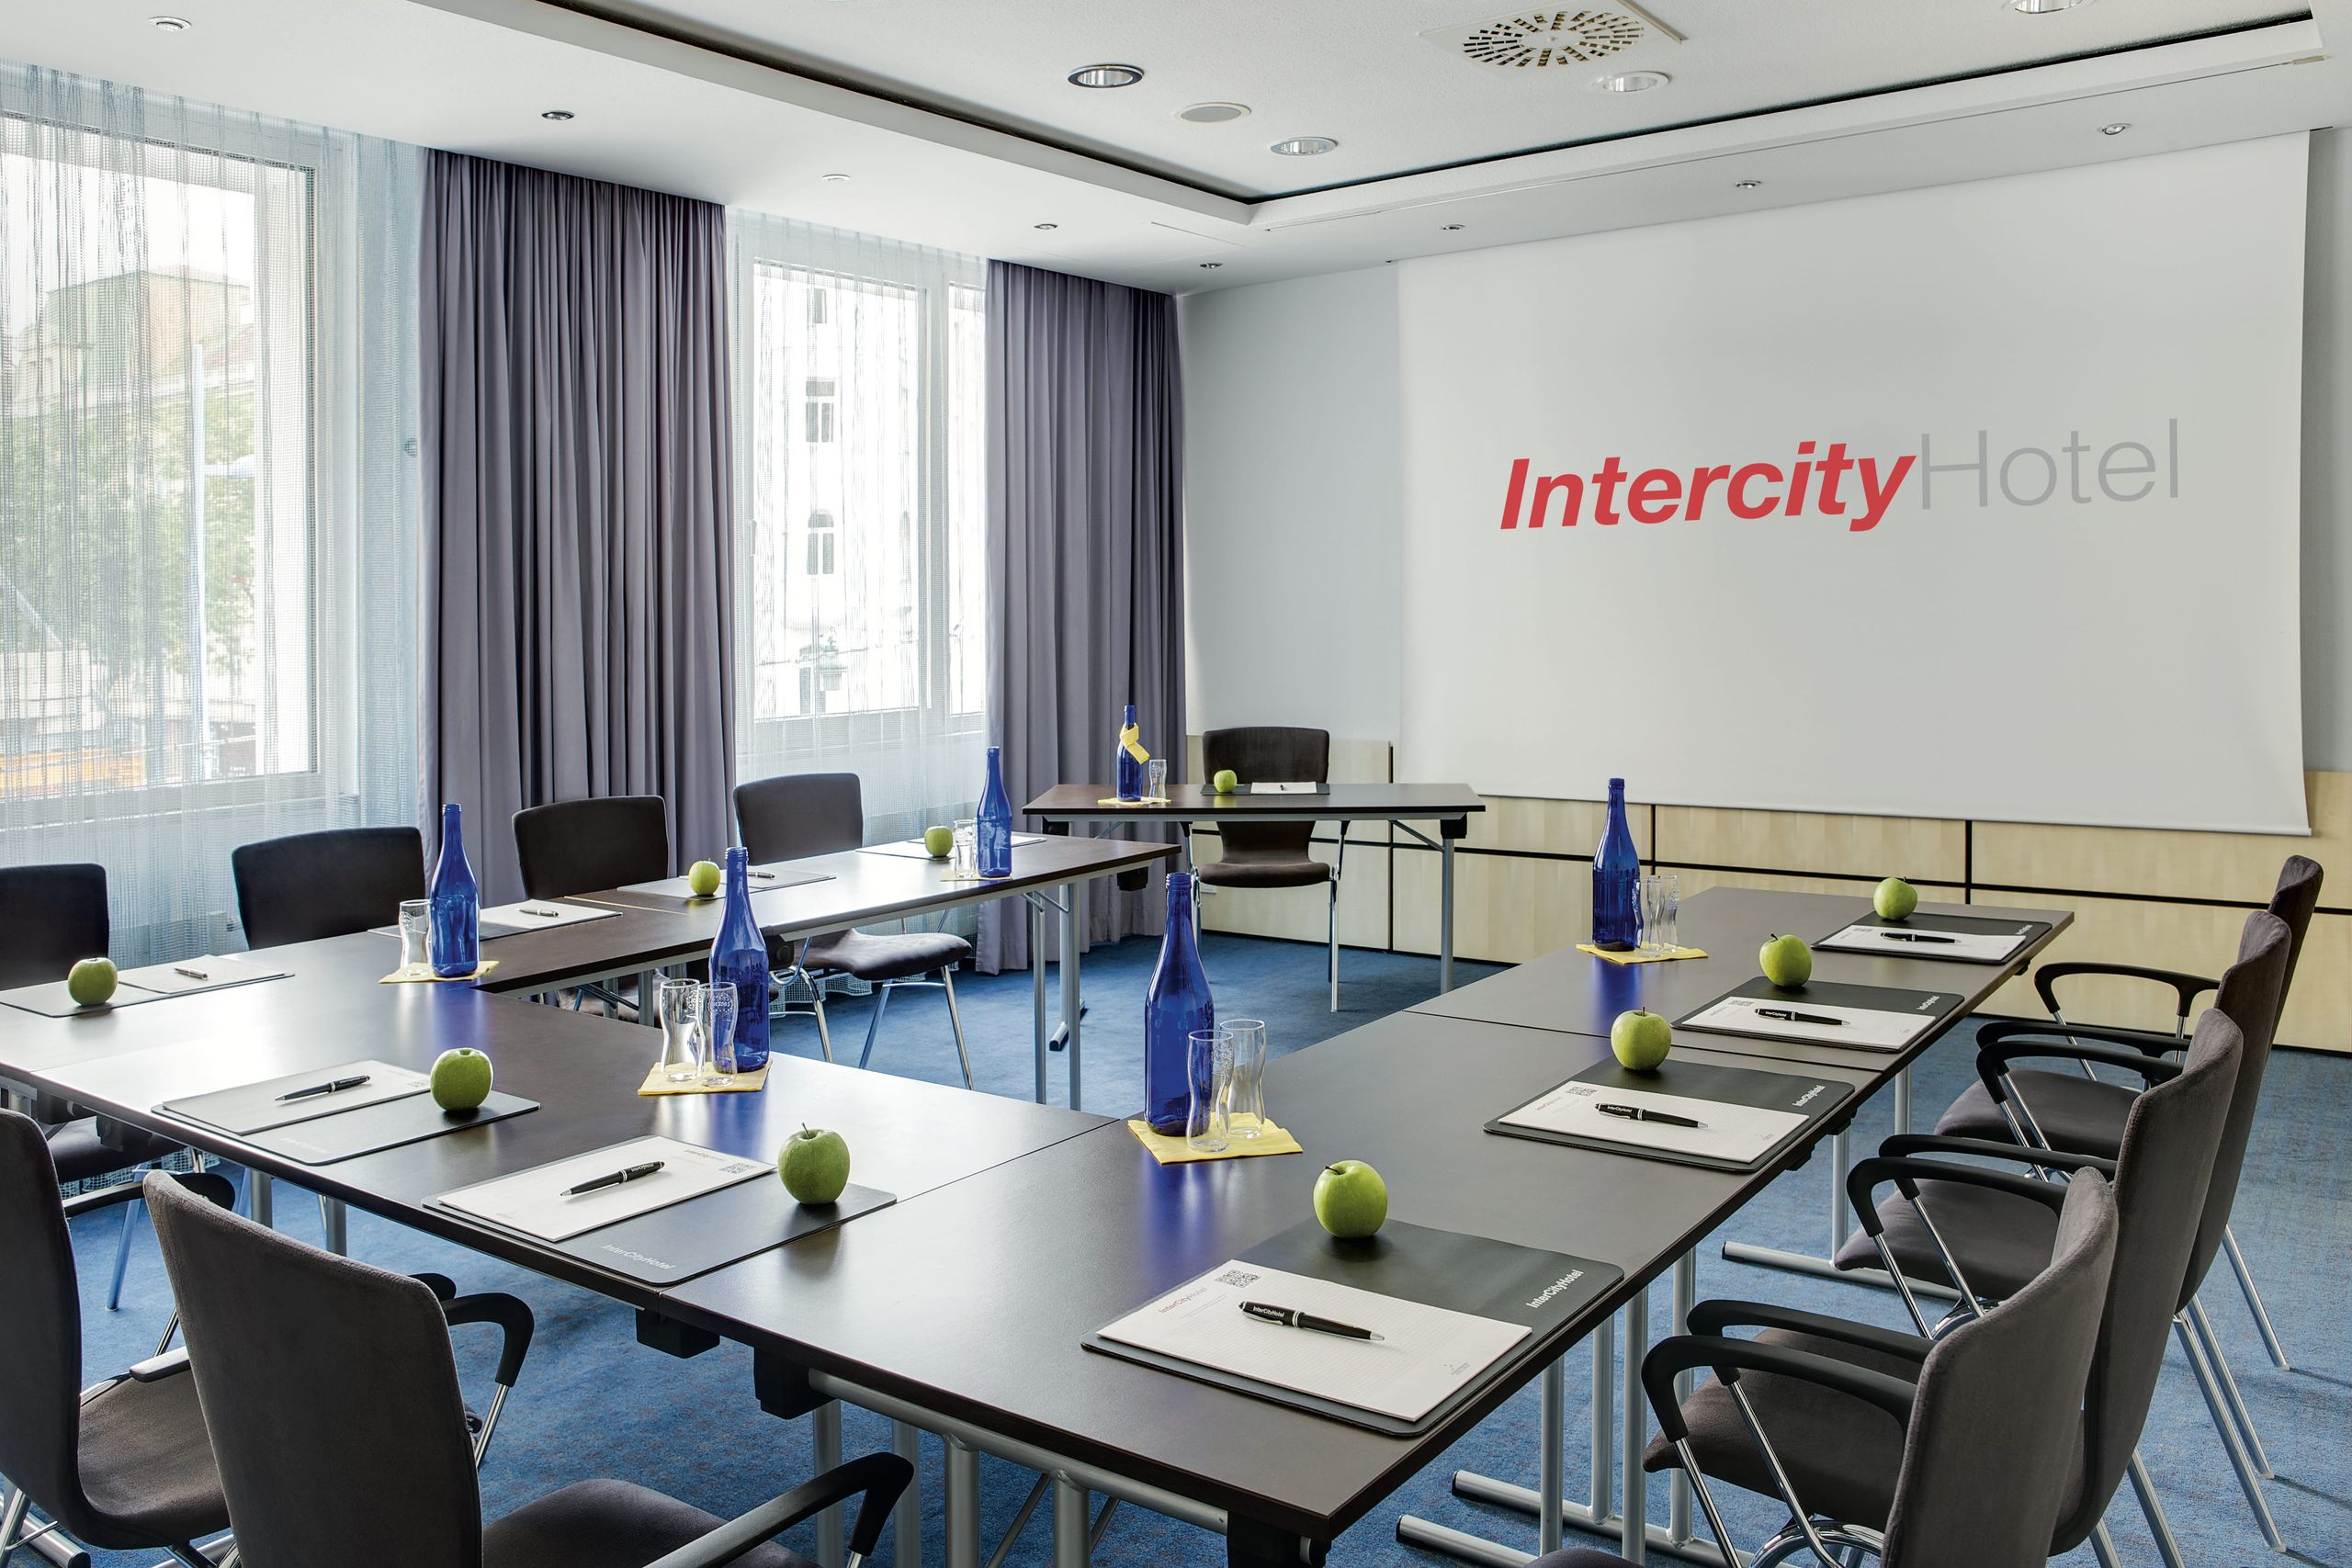 IntercityHotel 维也纳 - 会议室